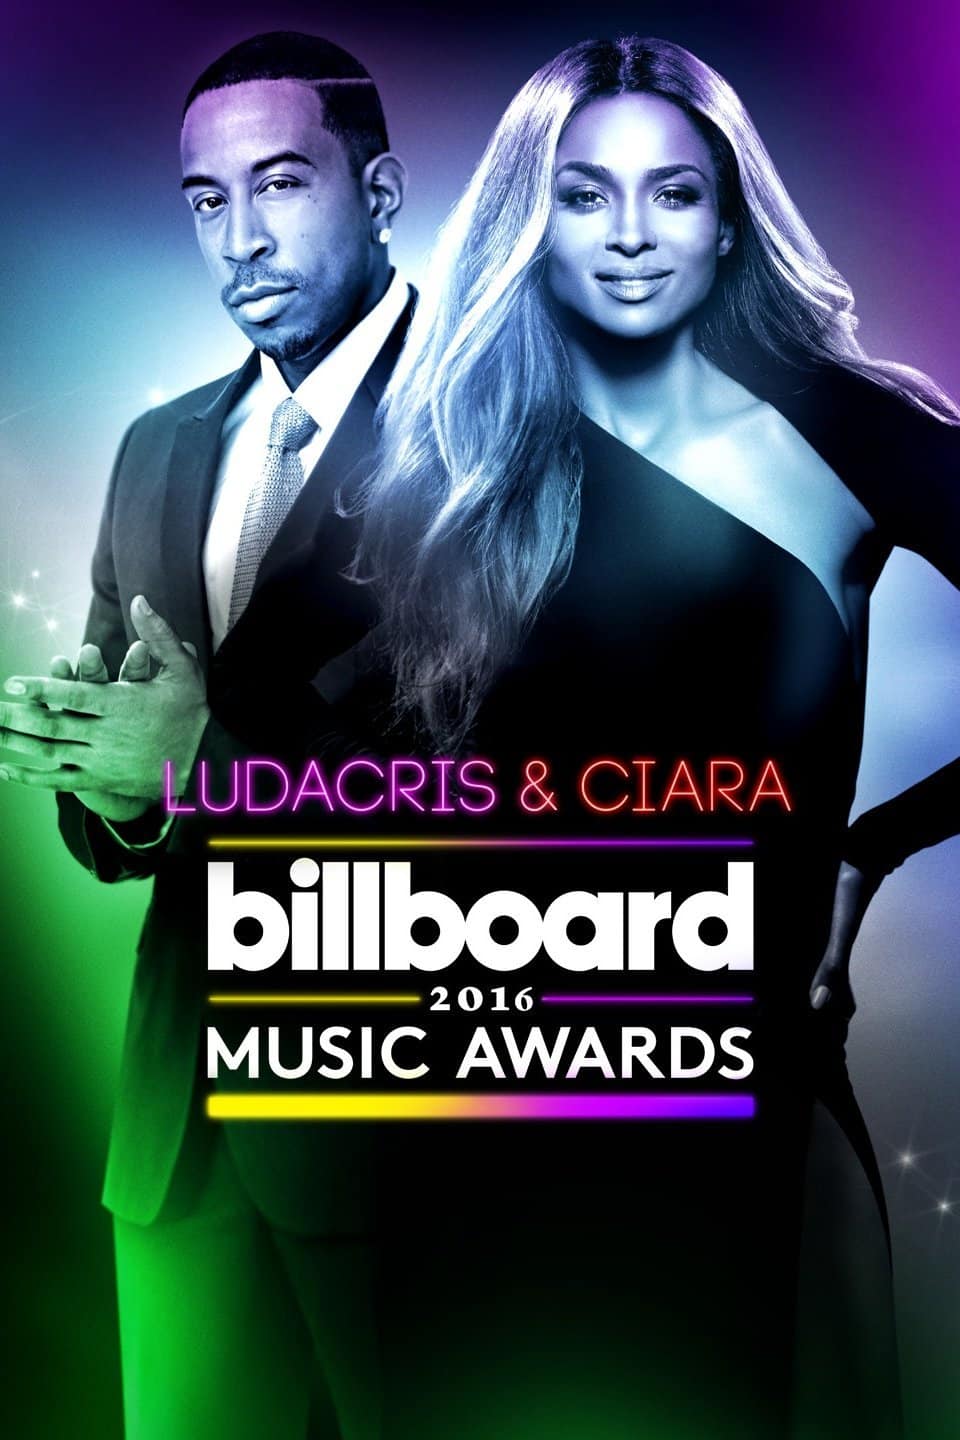 Billboard Music Awards, 2016 